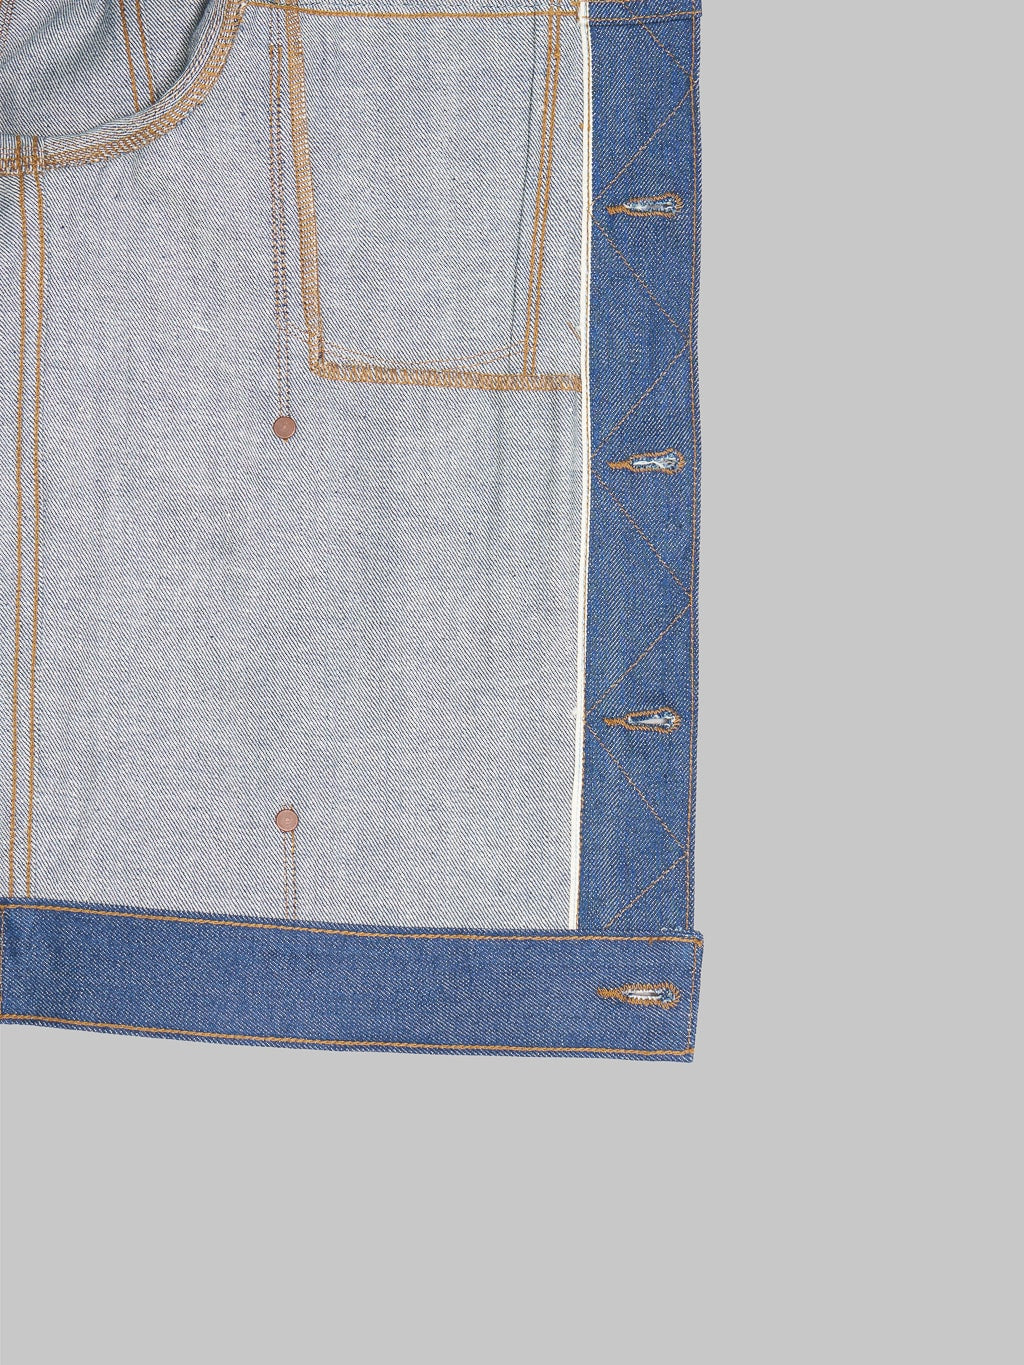 Freenote Cloth Classic Denim Jacket 12 Ounce Vintage Blue Denim